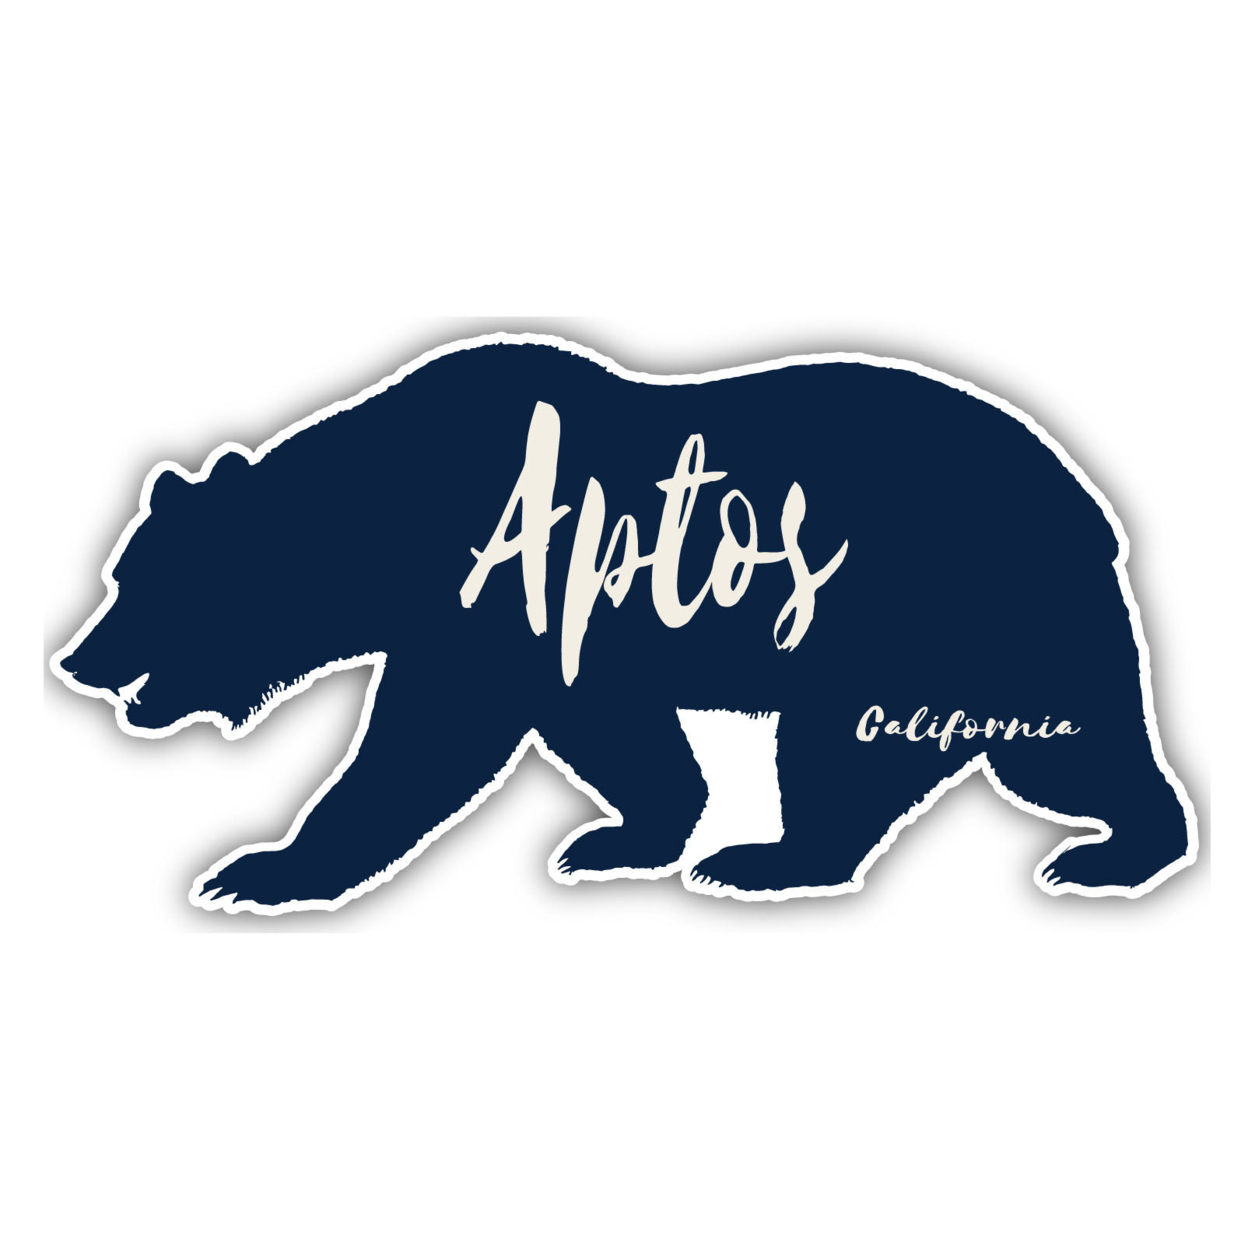 Aptos California Souvenir Decorative Stickers (Choose Theme And Size) - Single Unit, 10-Inch, Bear